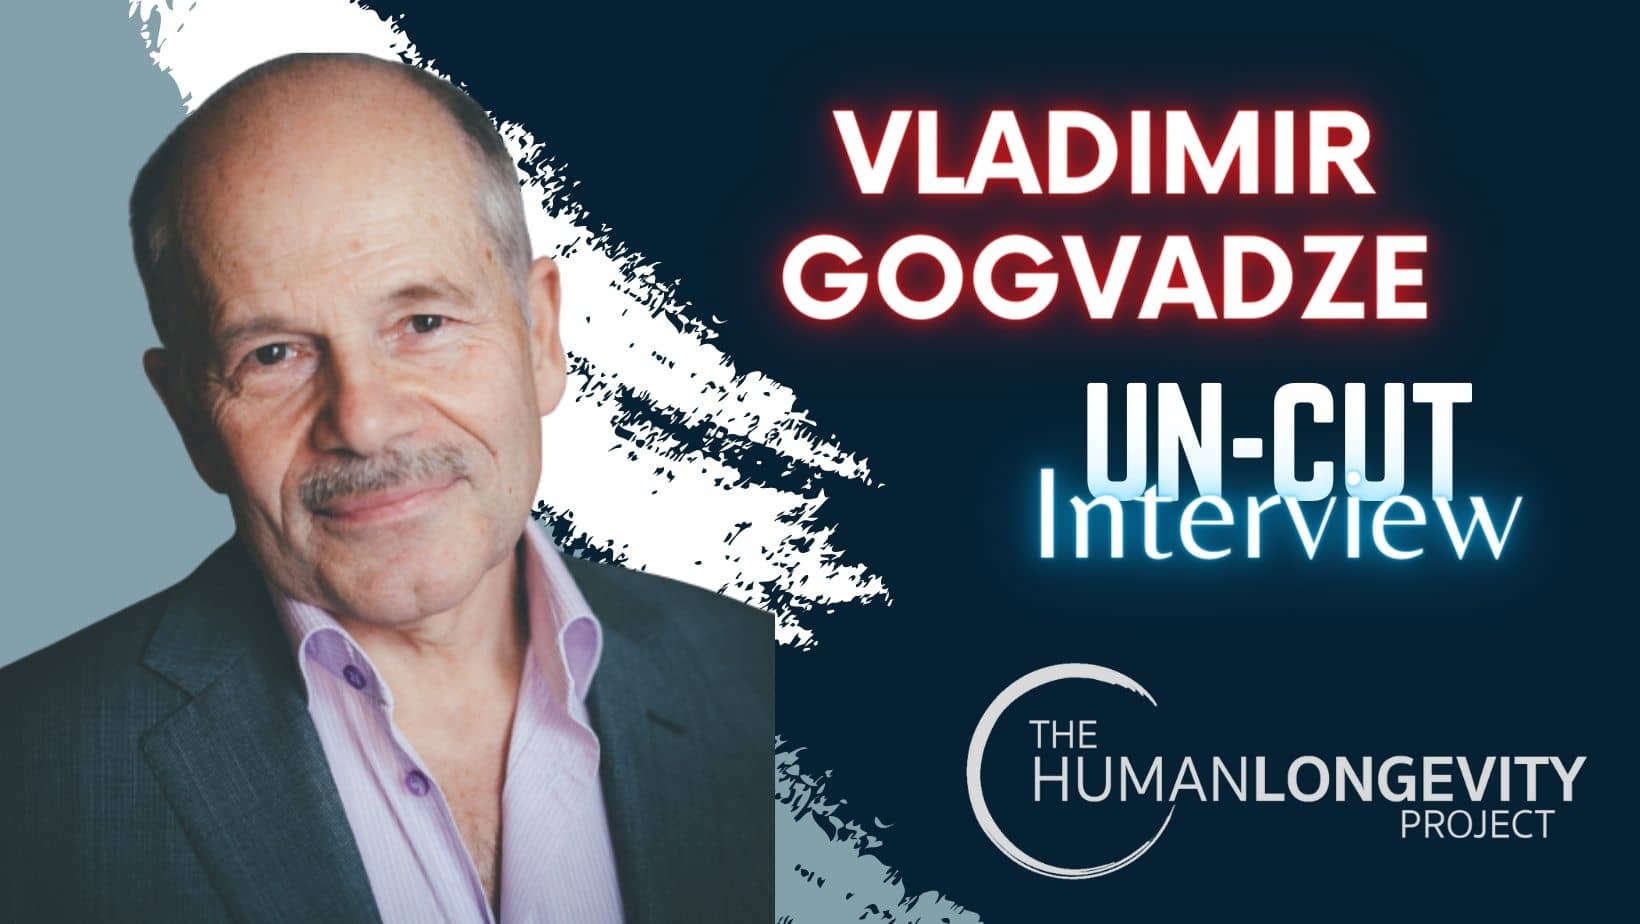 Human Longevity Project Uncut Interview With Dr. Vladimir Gogvadze